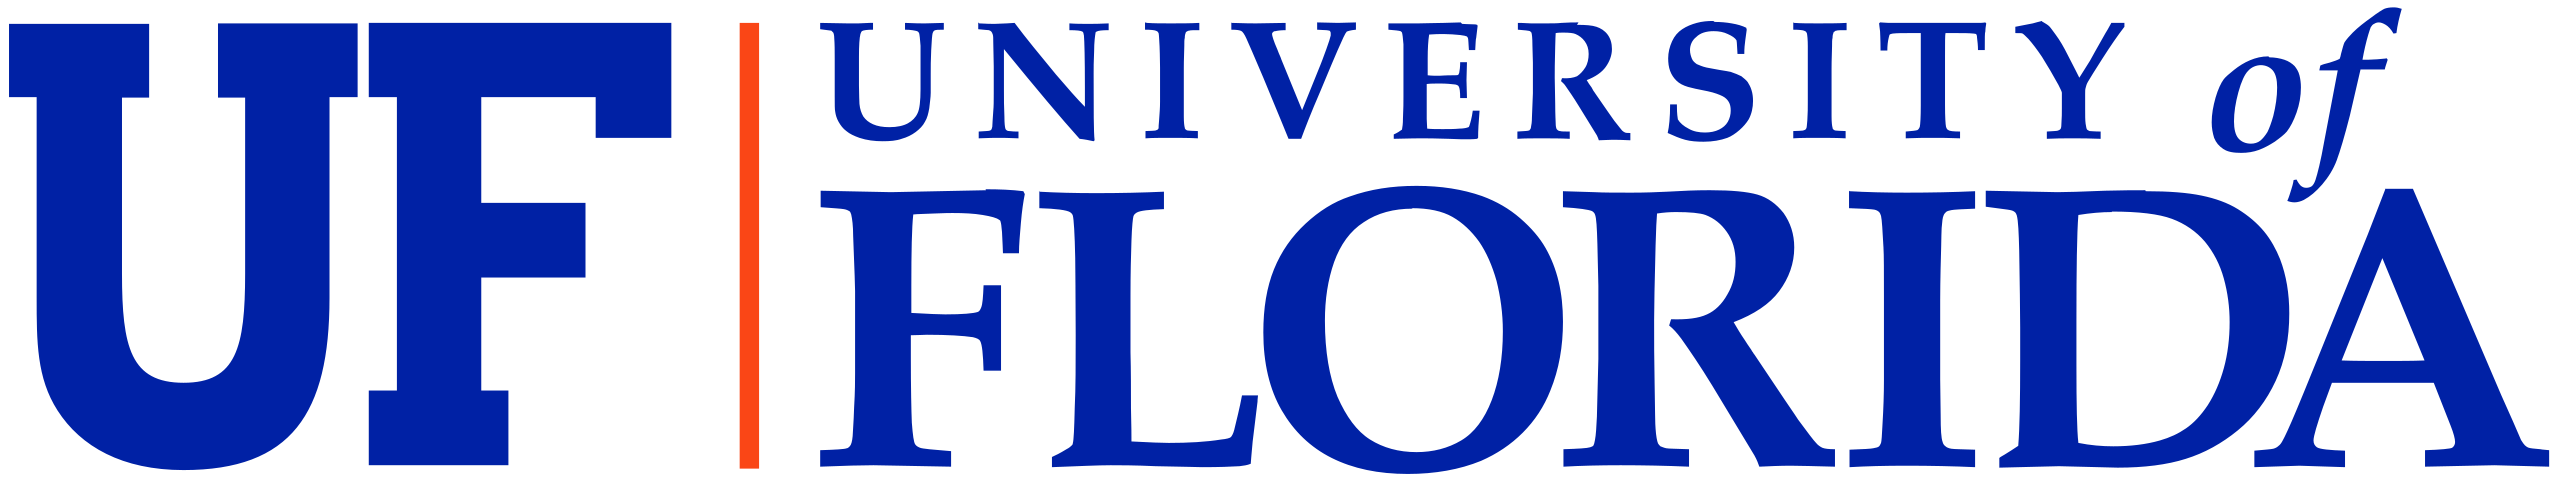 Universaty of Florida logo